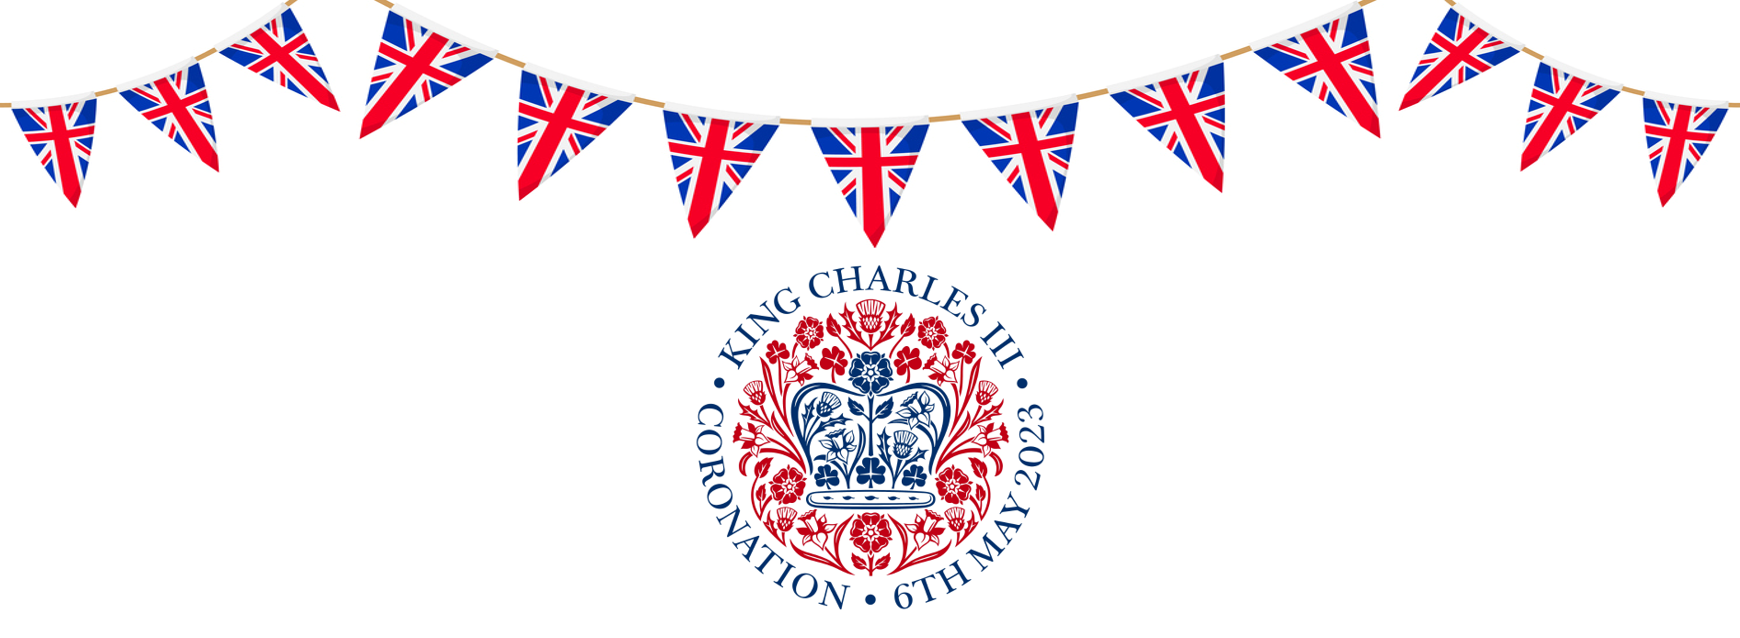 Coronation banner